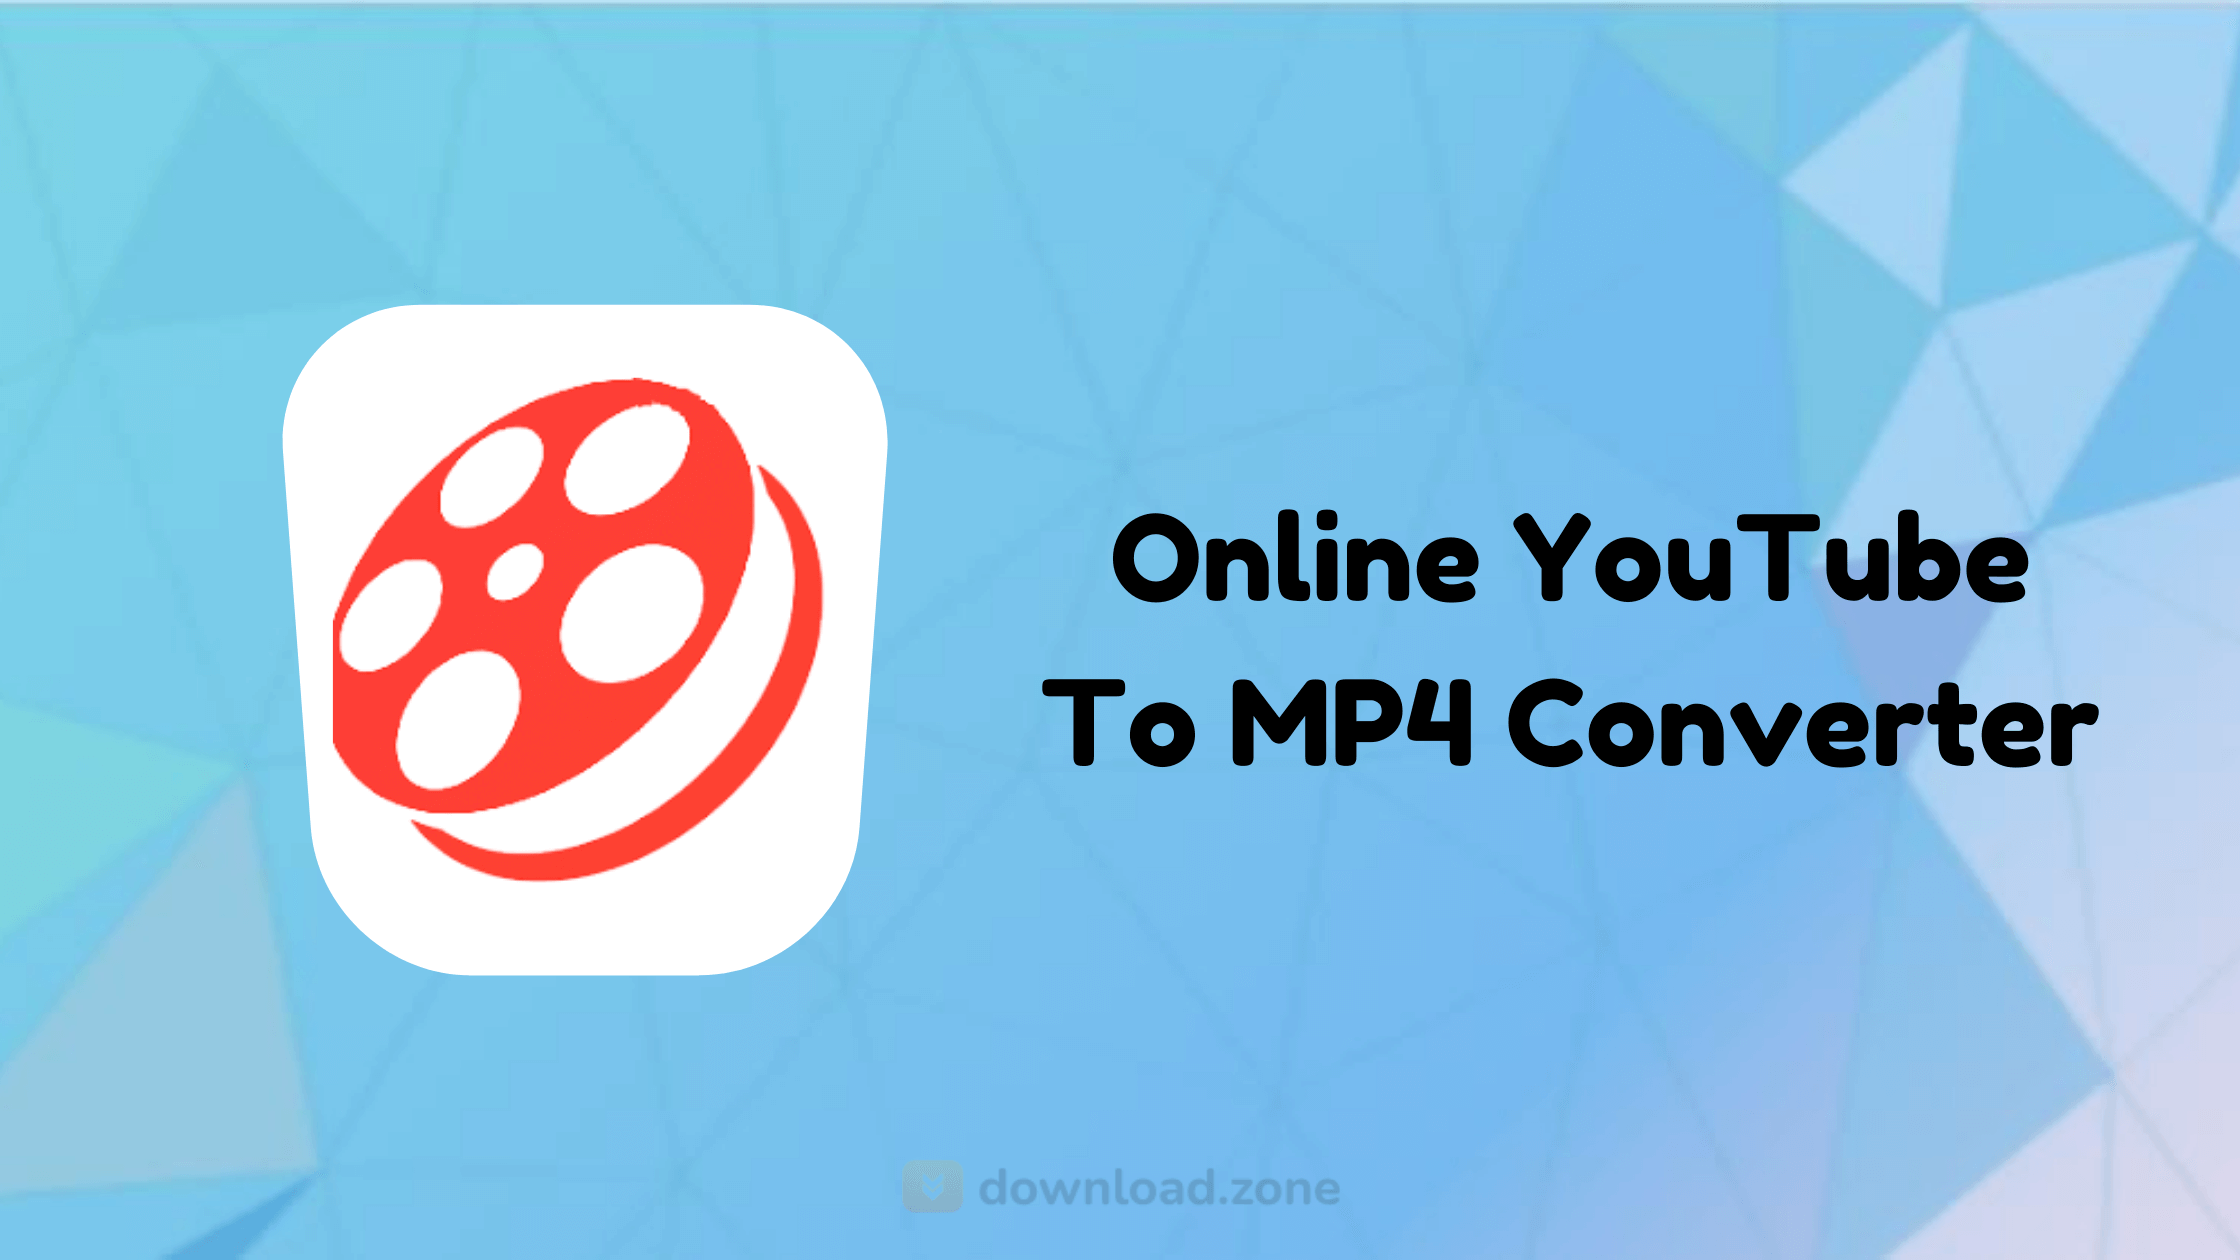 Mp4 converter online